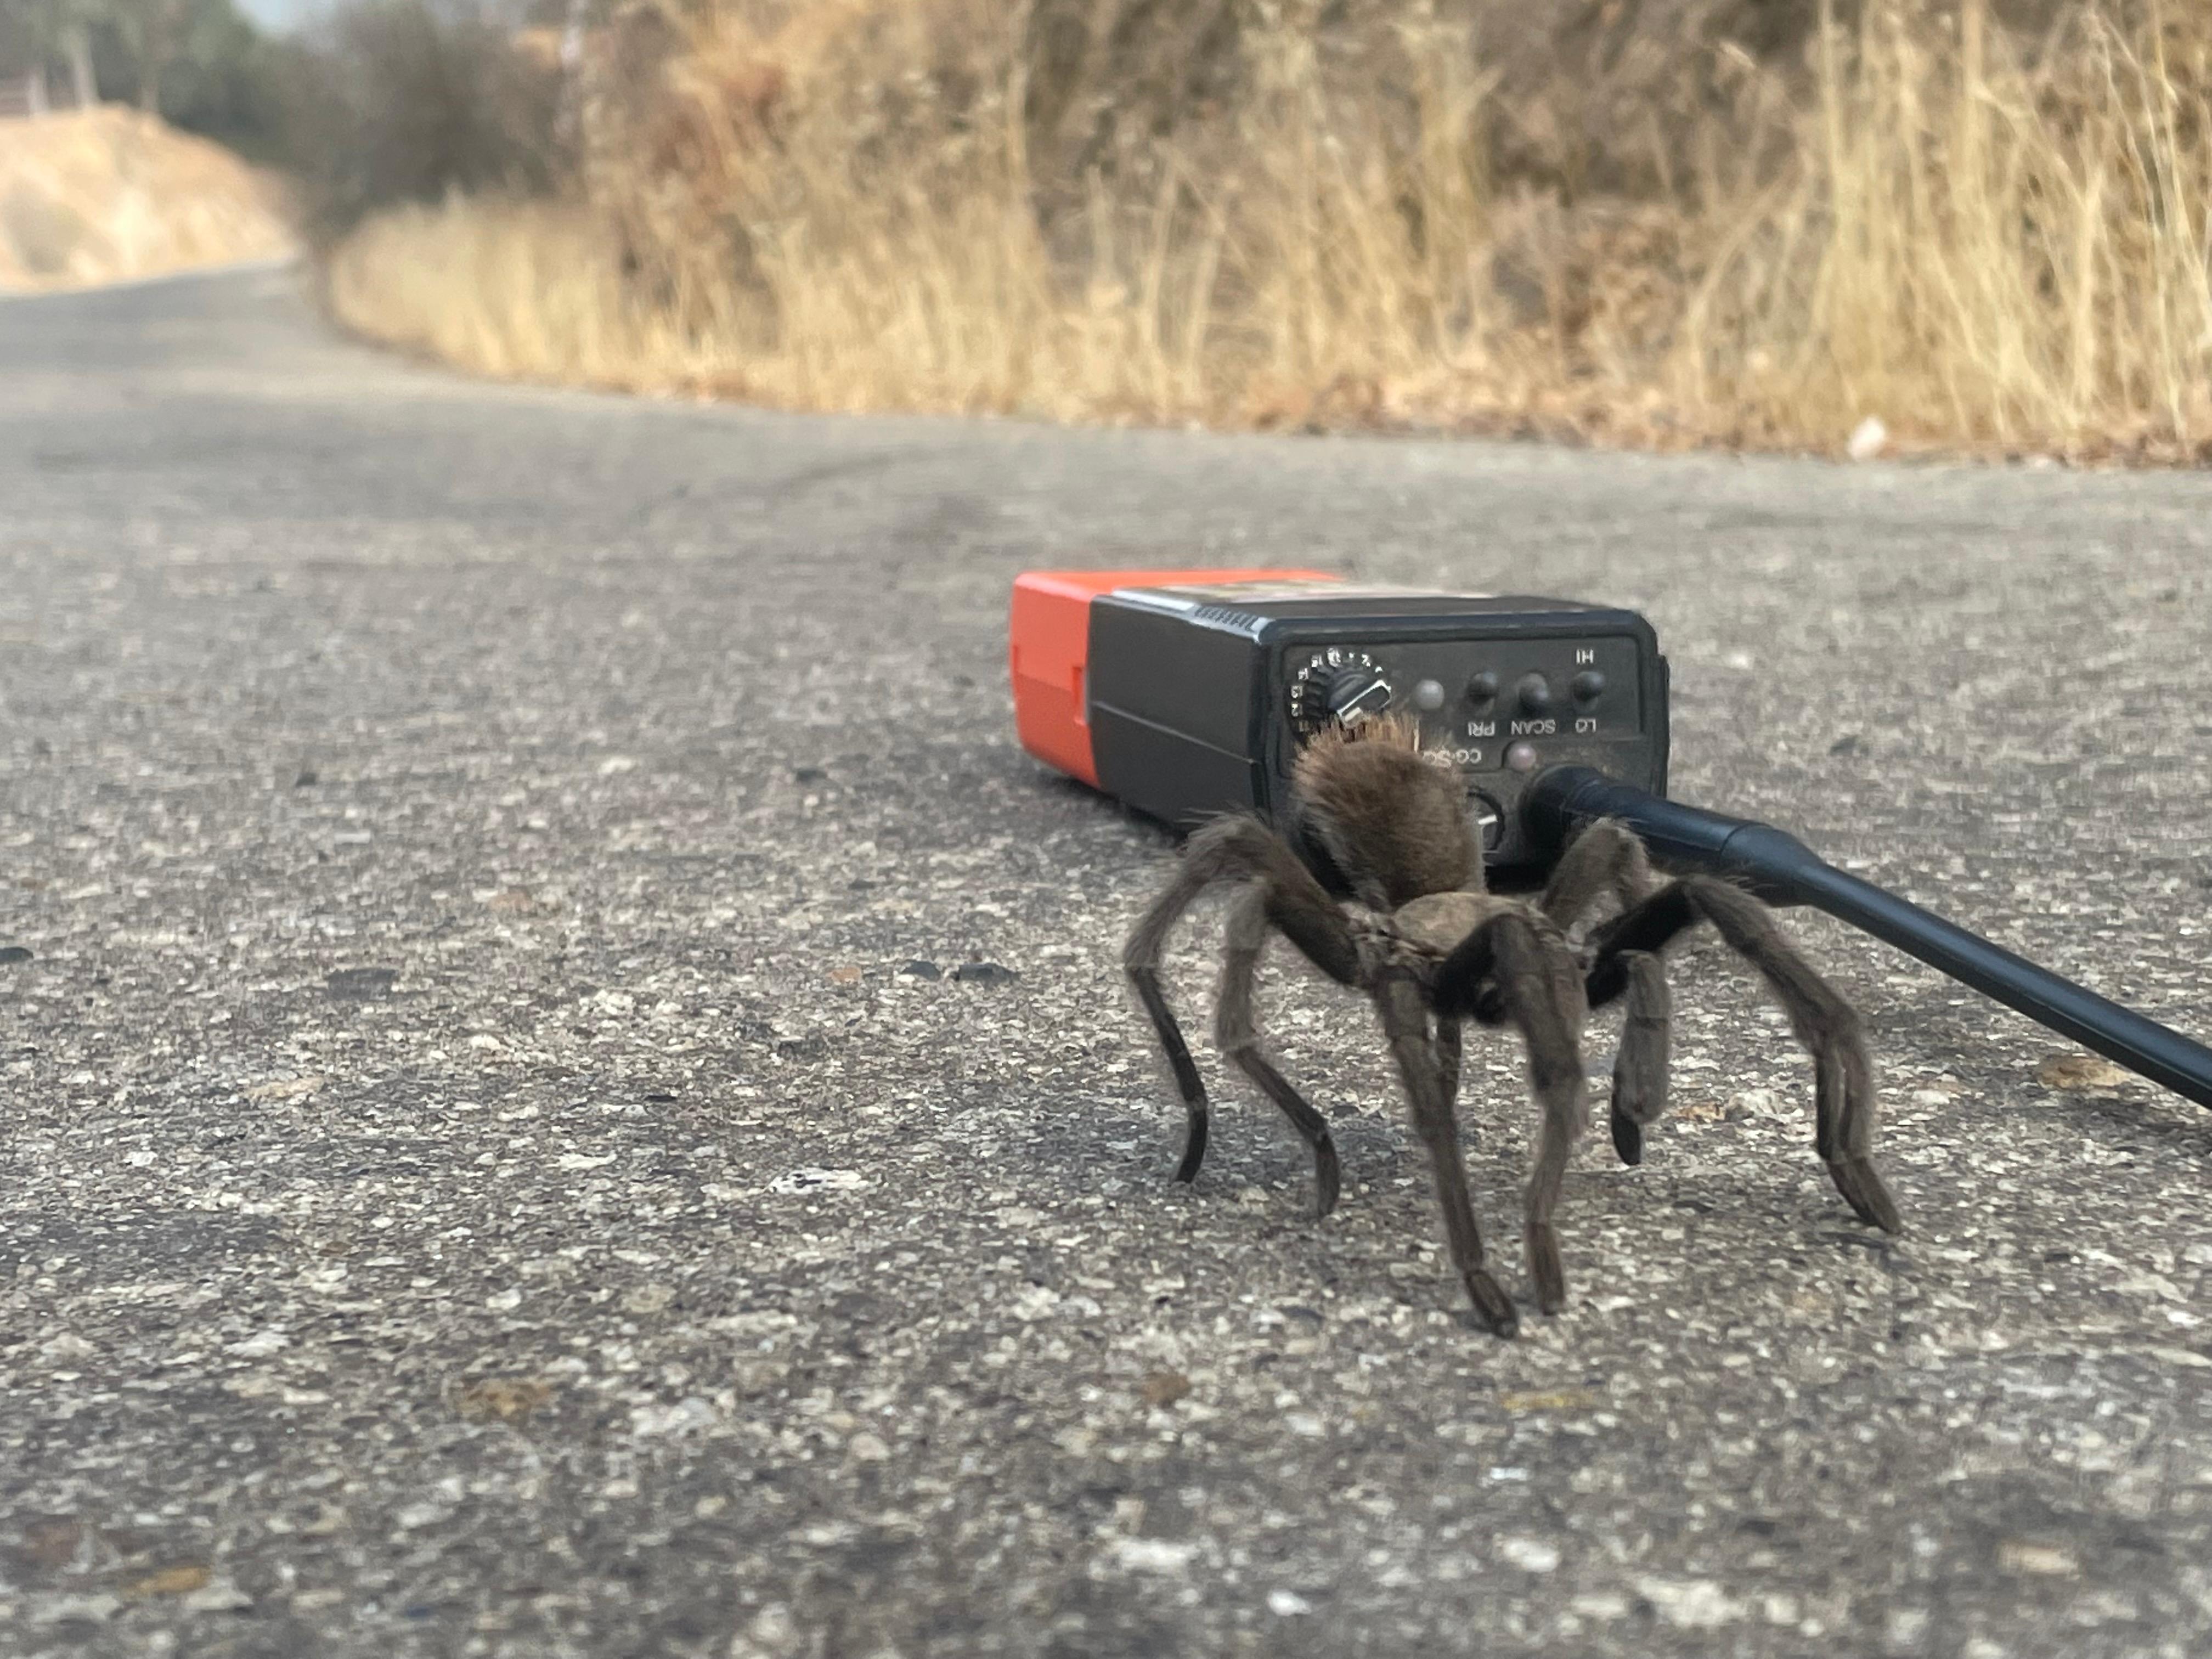 California tarantula next to handheld radio on road 